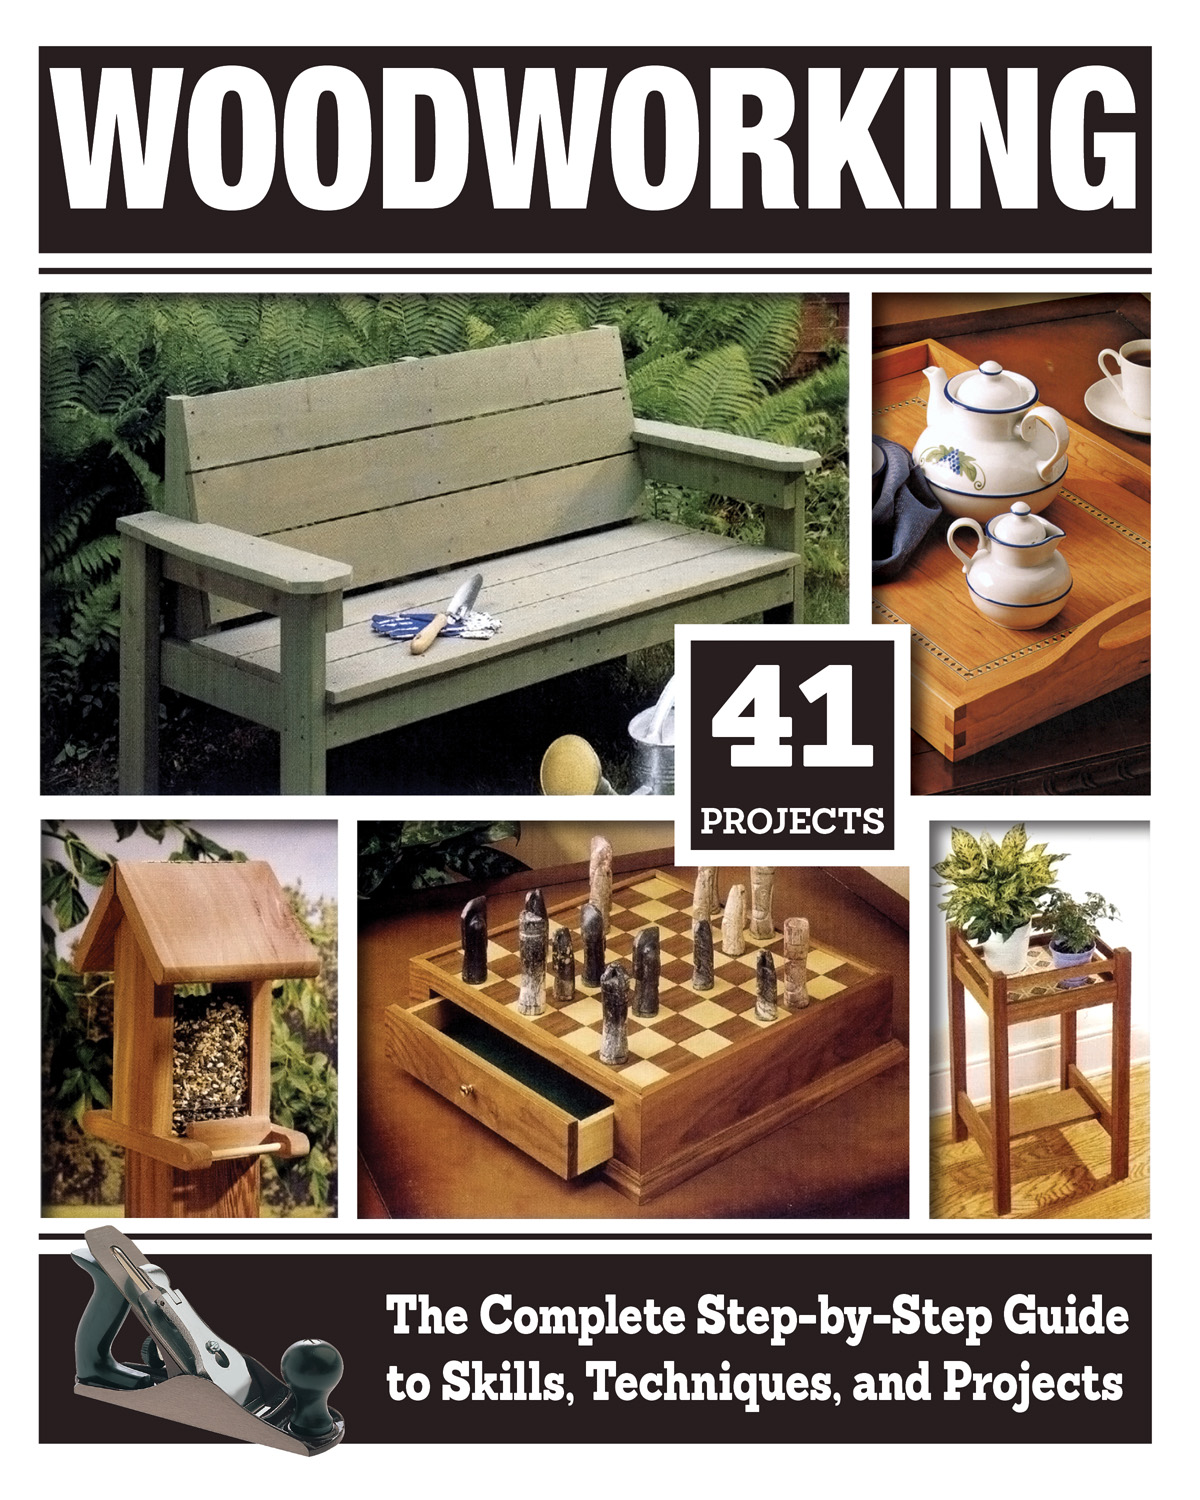 Woodcarving Illustrated Magazine